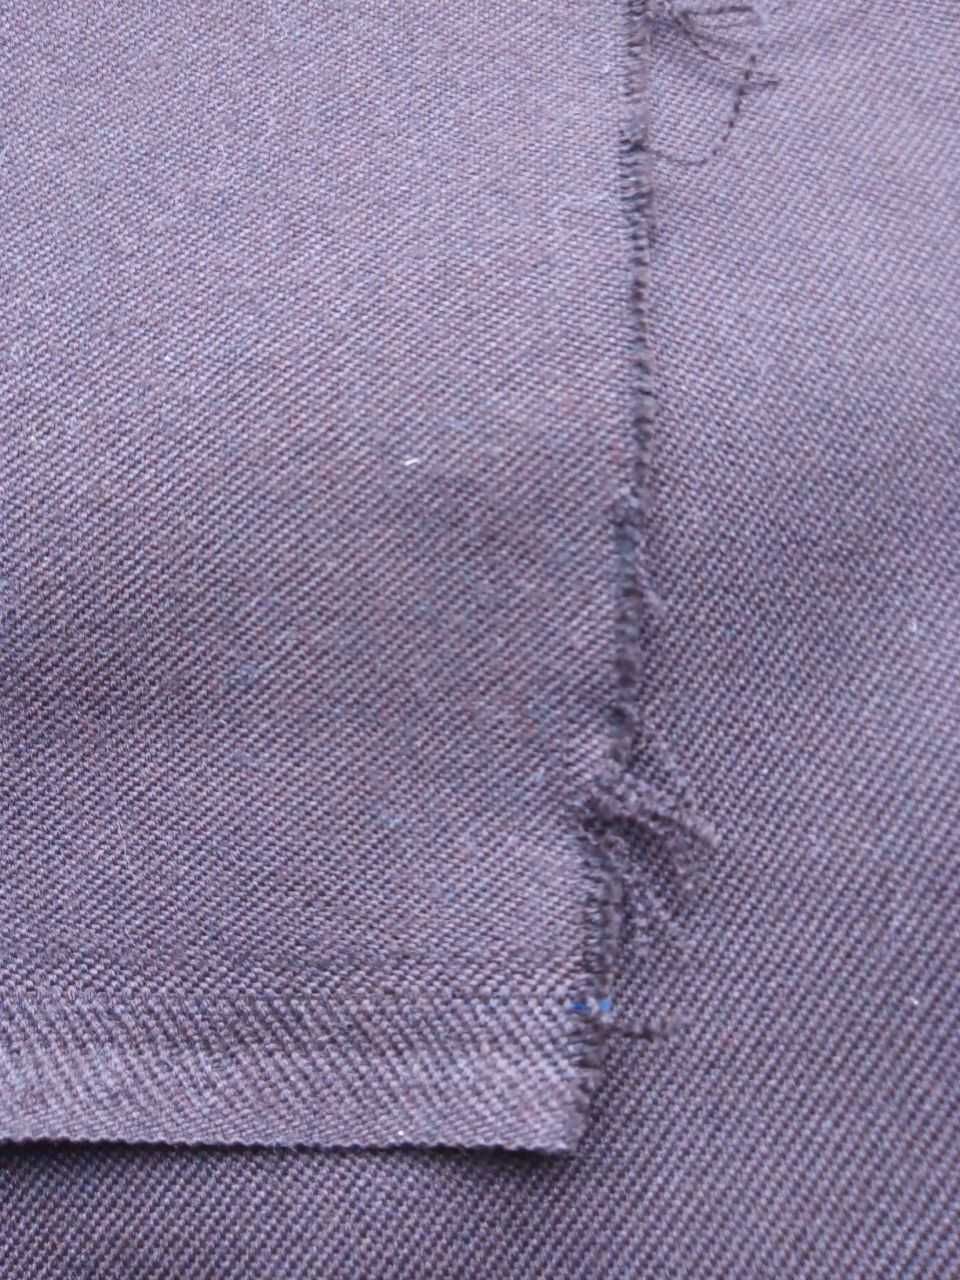 Ткань темно-коричневая 2 куска для брюк и юбок